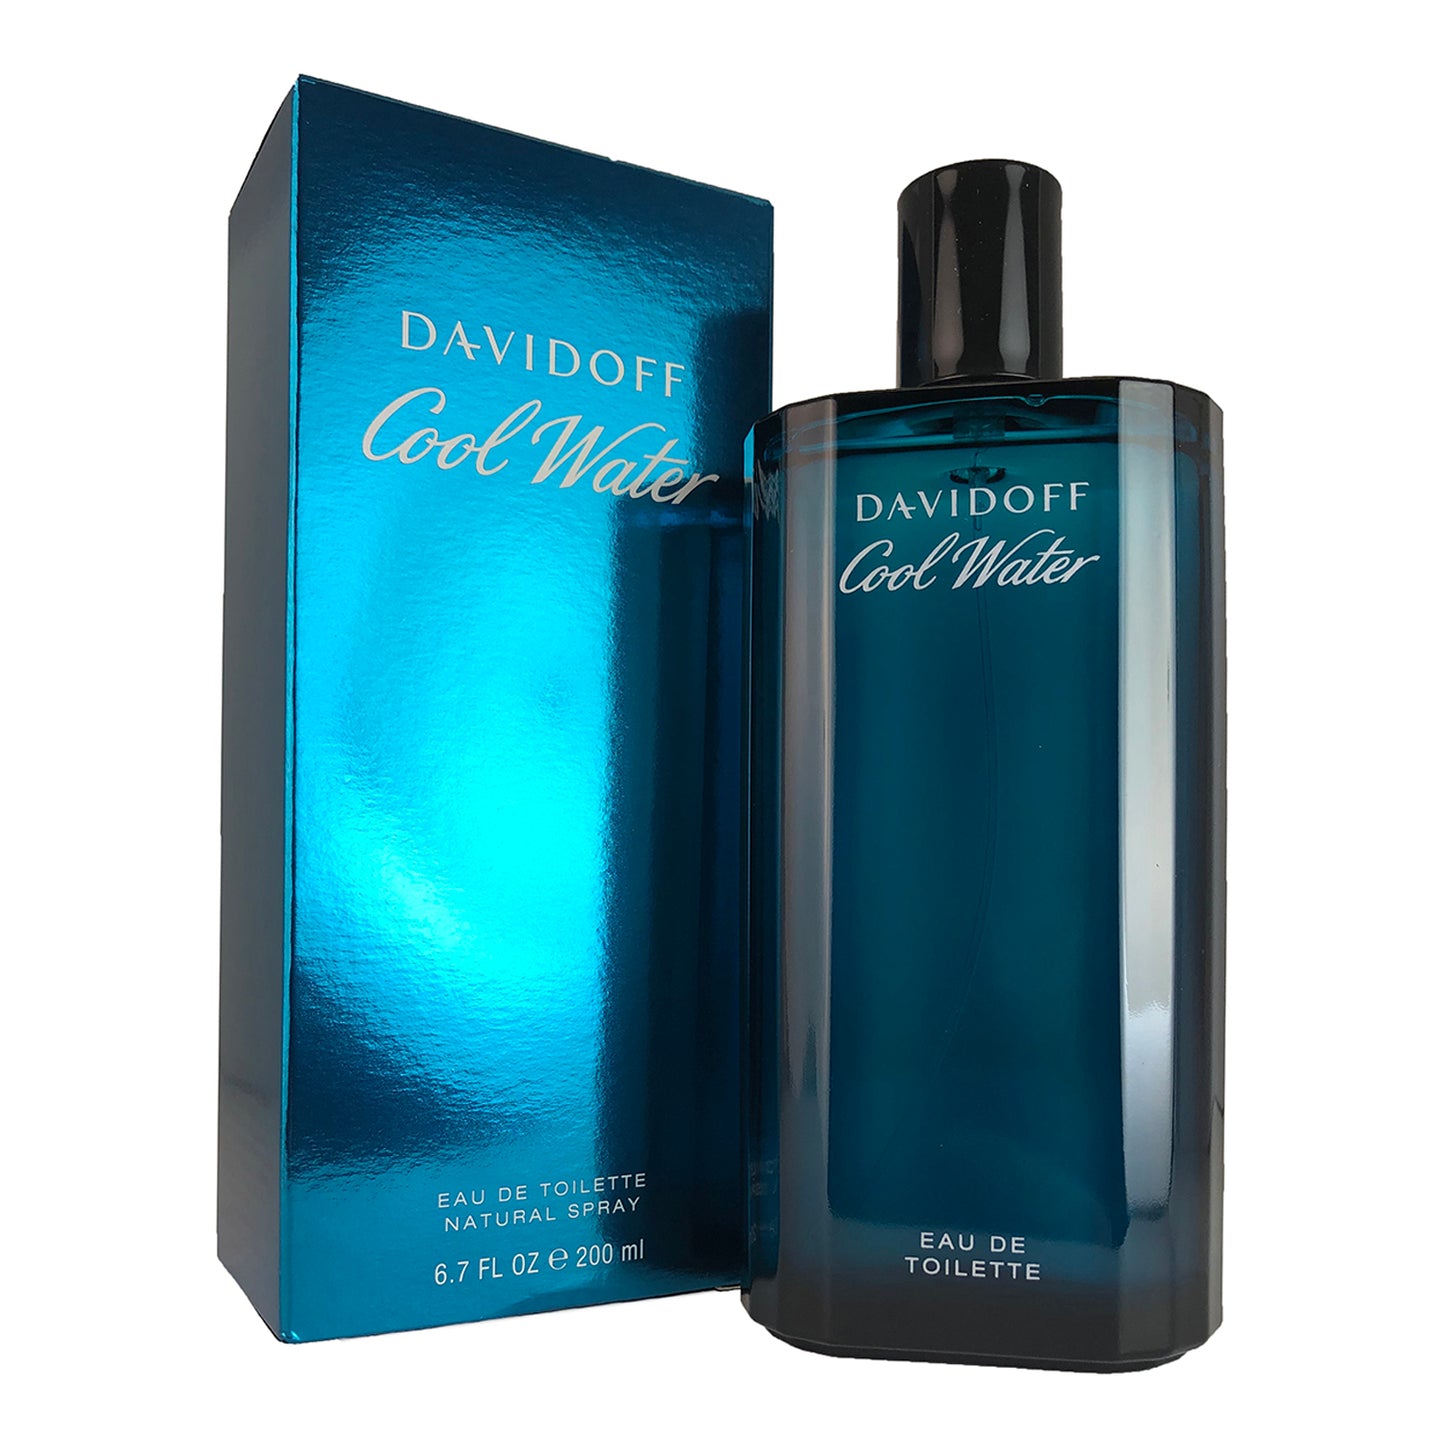 Cool Water for Men Limited Edition by Davidoff 6.7 oz Eau de Toilette Spray